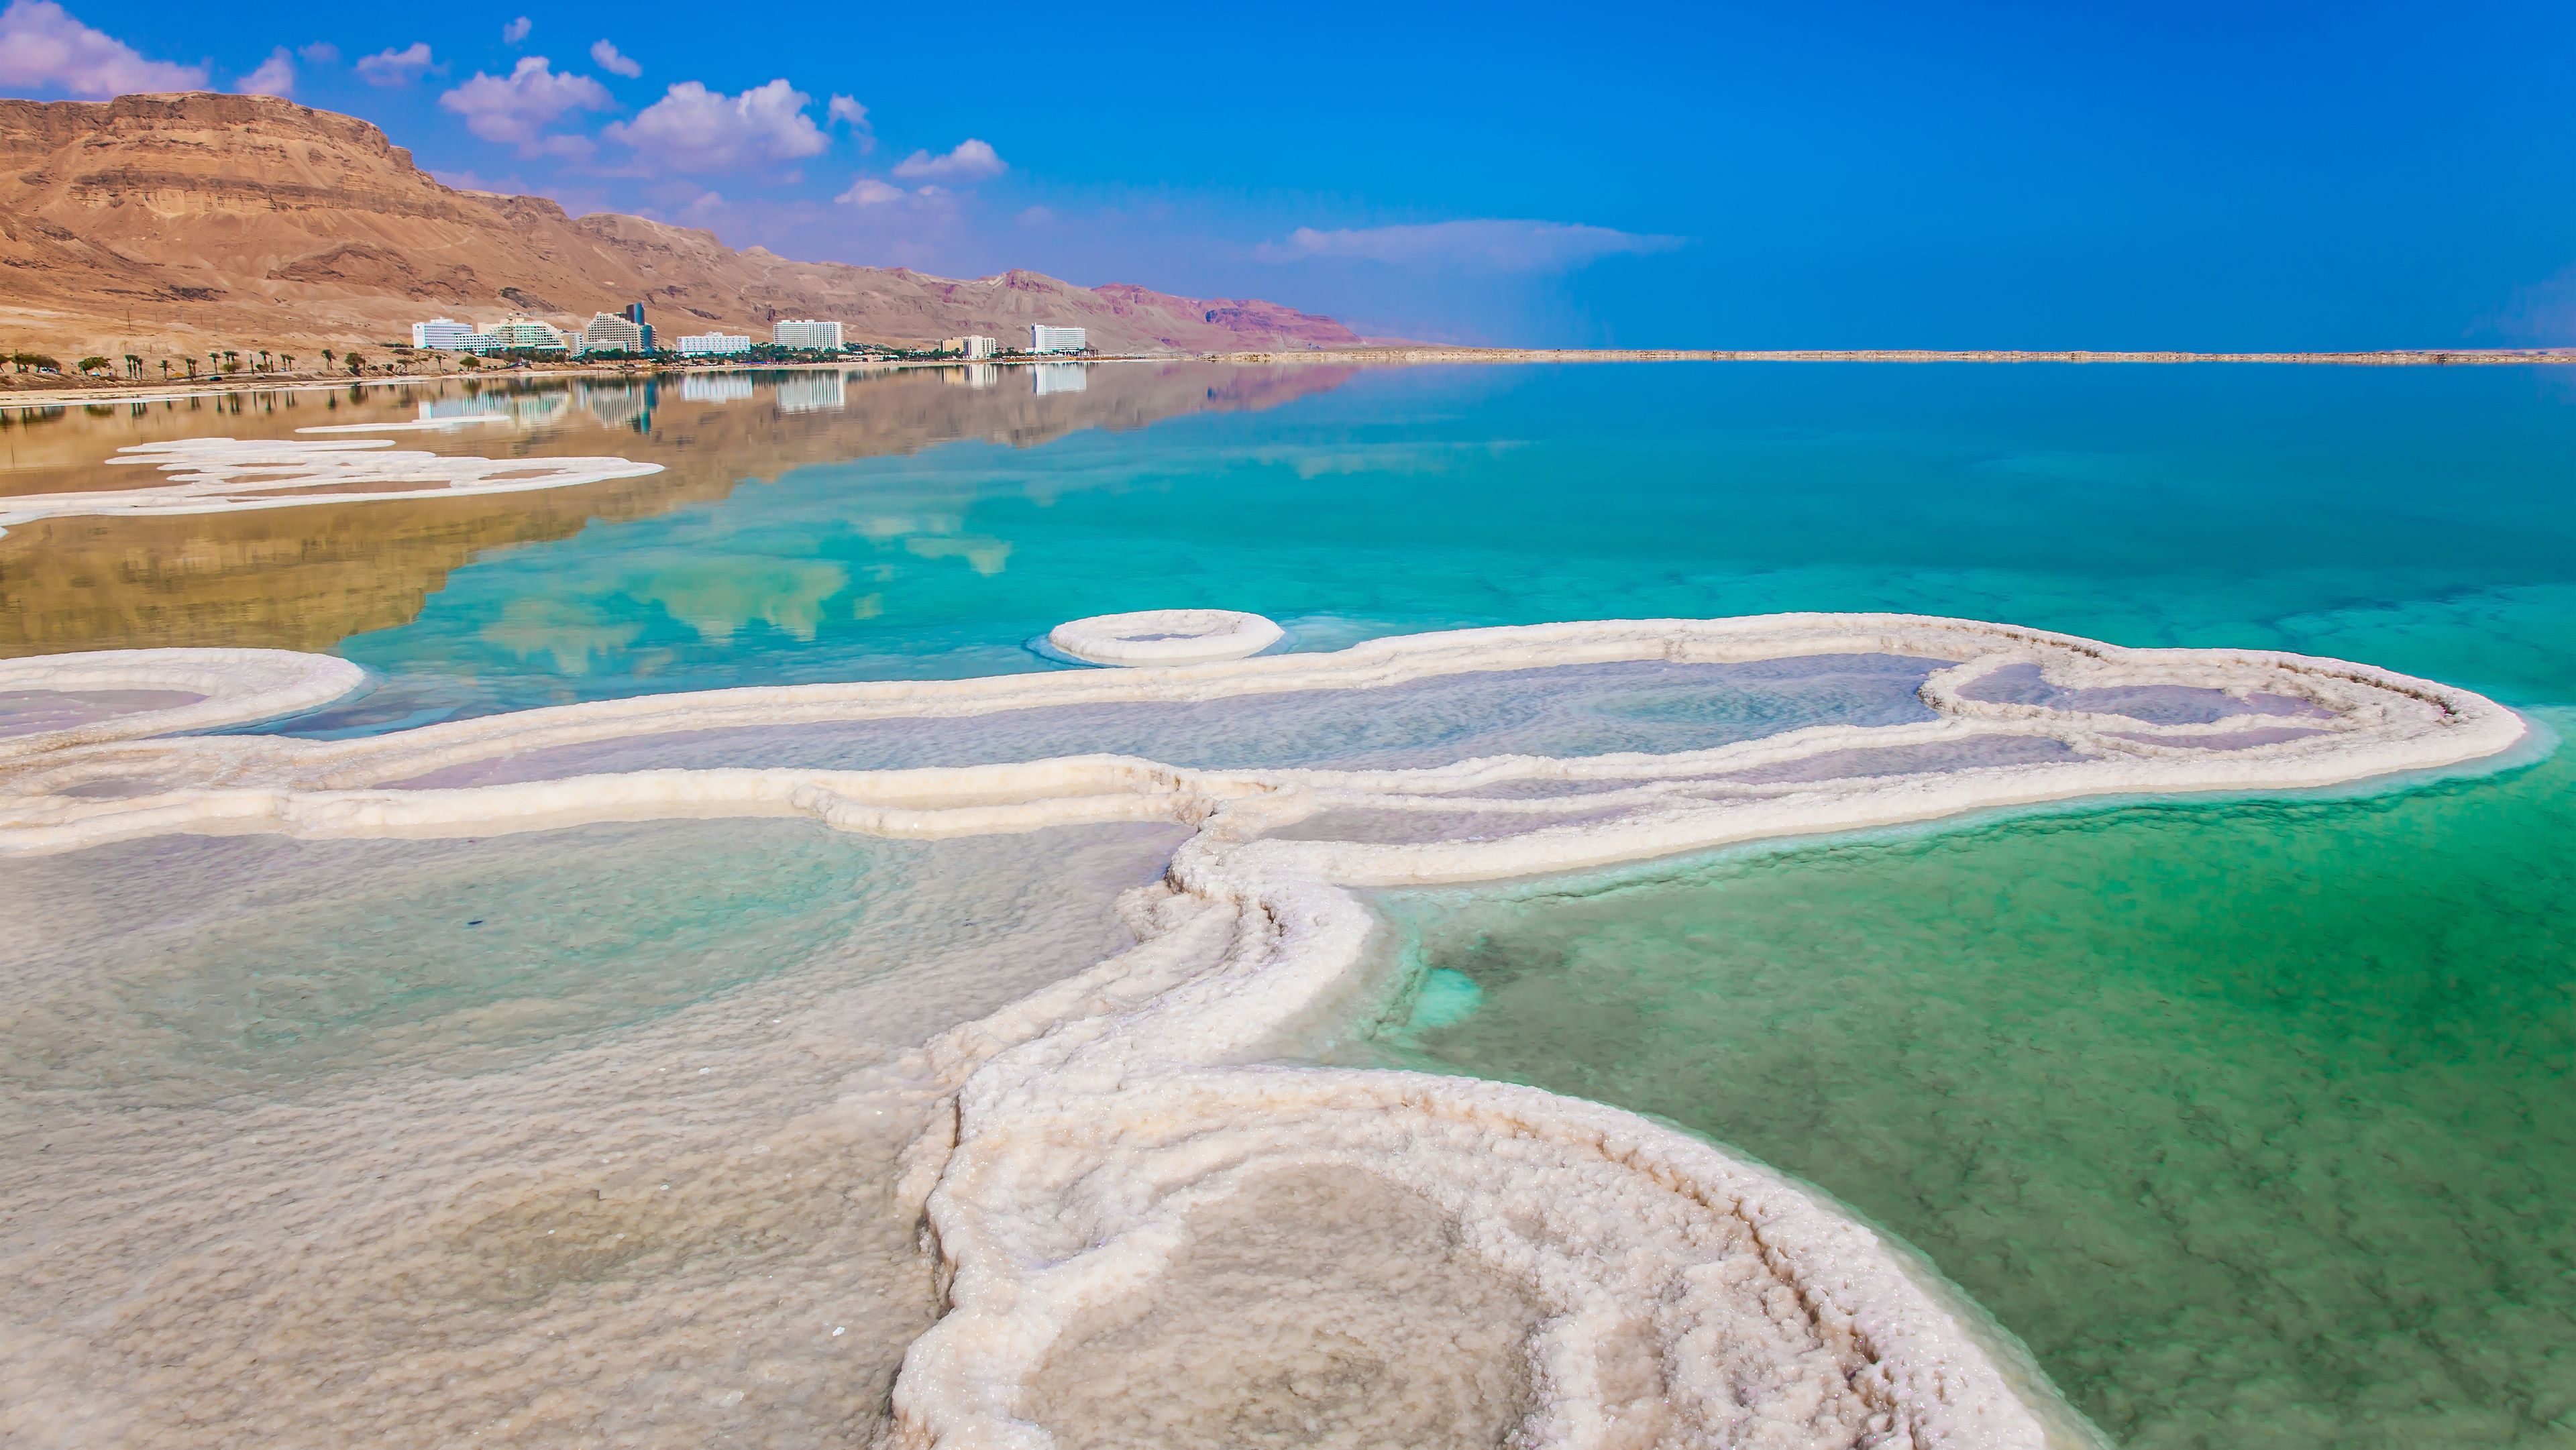 Dead sea with salt water